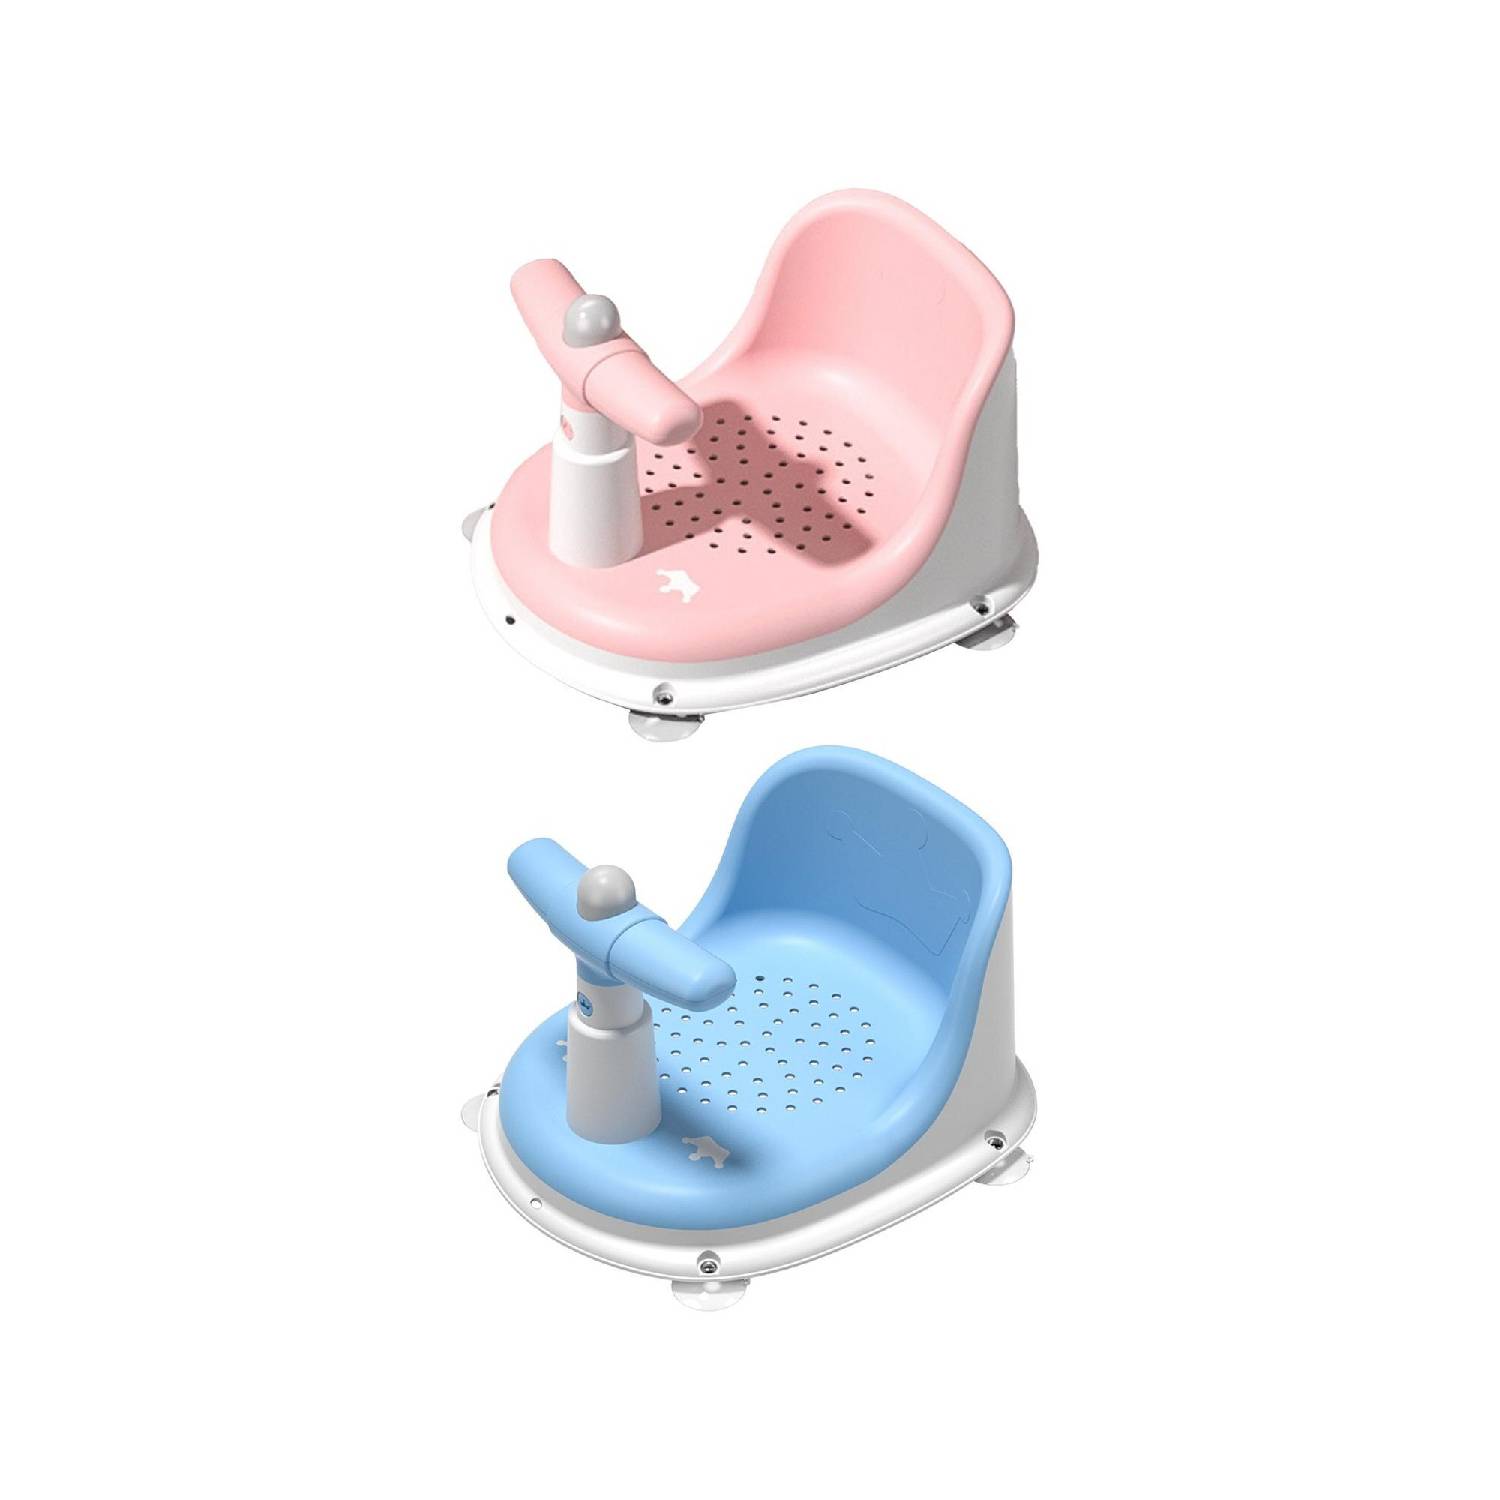 Asiento de baño para bebé, silla de baño para bebé, asiento de